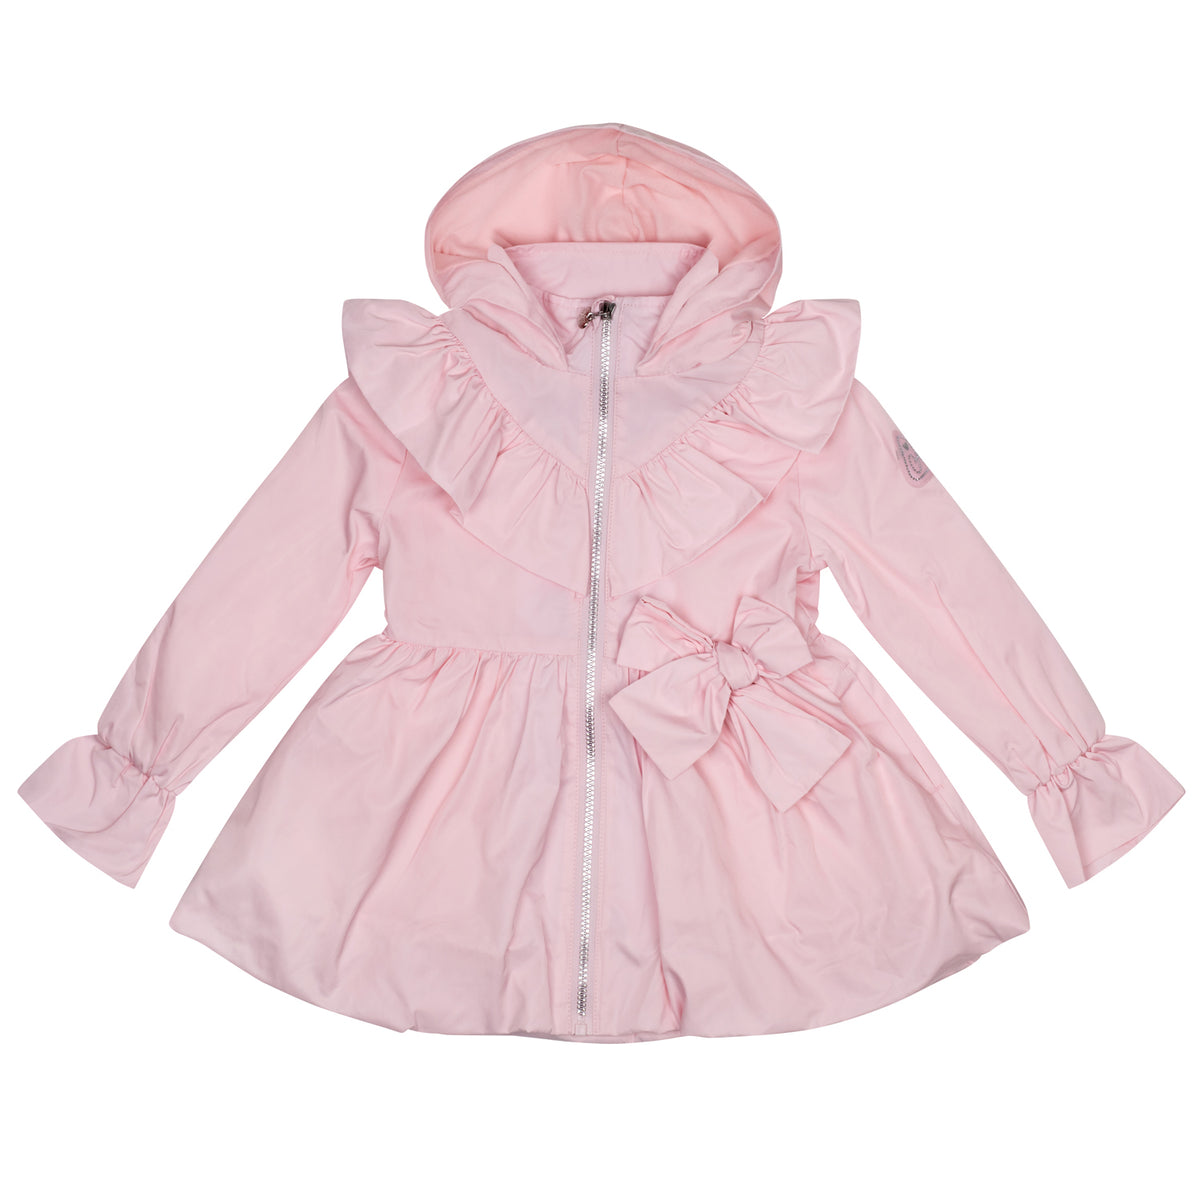 A Dee Girls 'Natalie' Pink Frill & Bow Jacket